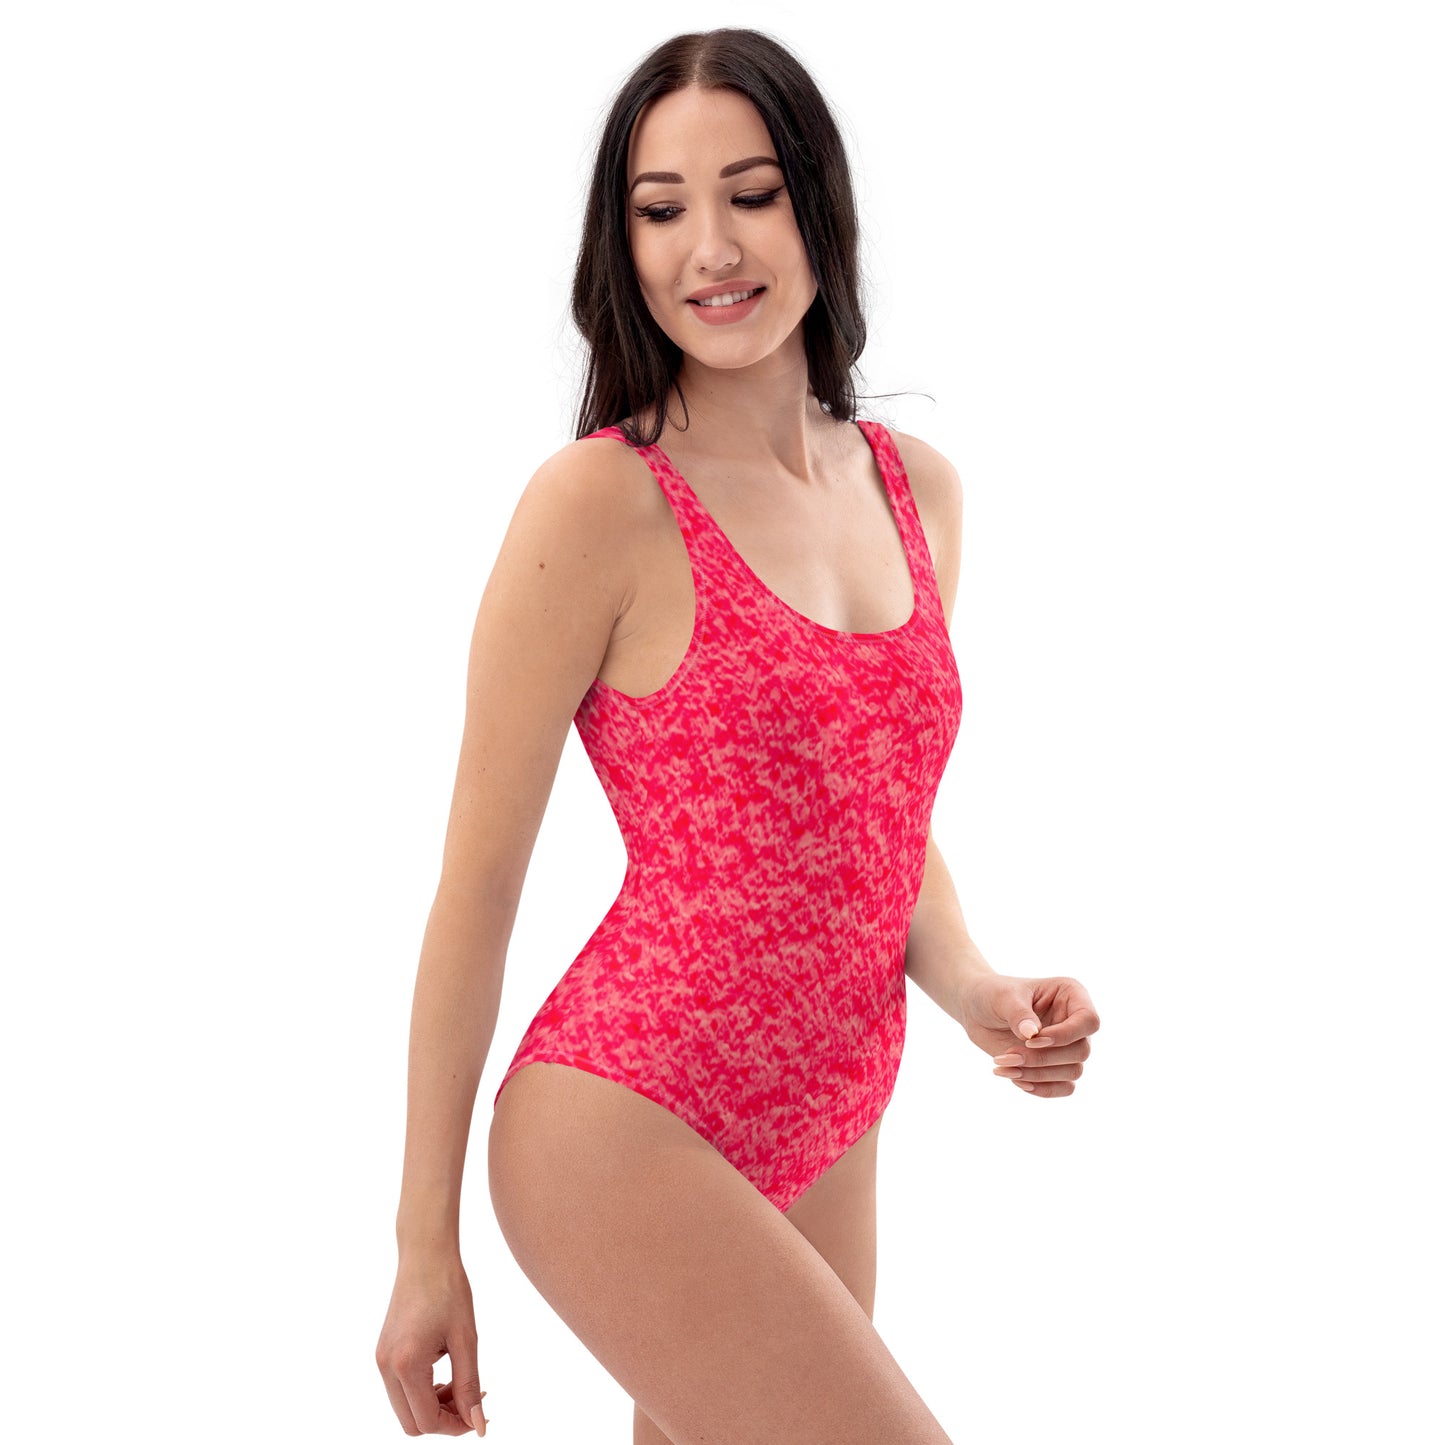 Women’s One-Piece Swimsuit - Razzle Dazzle Pink